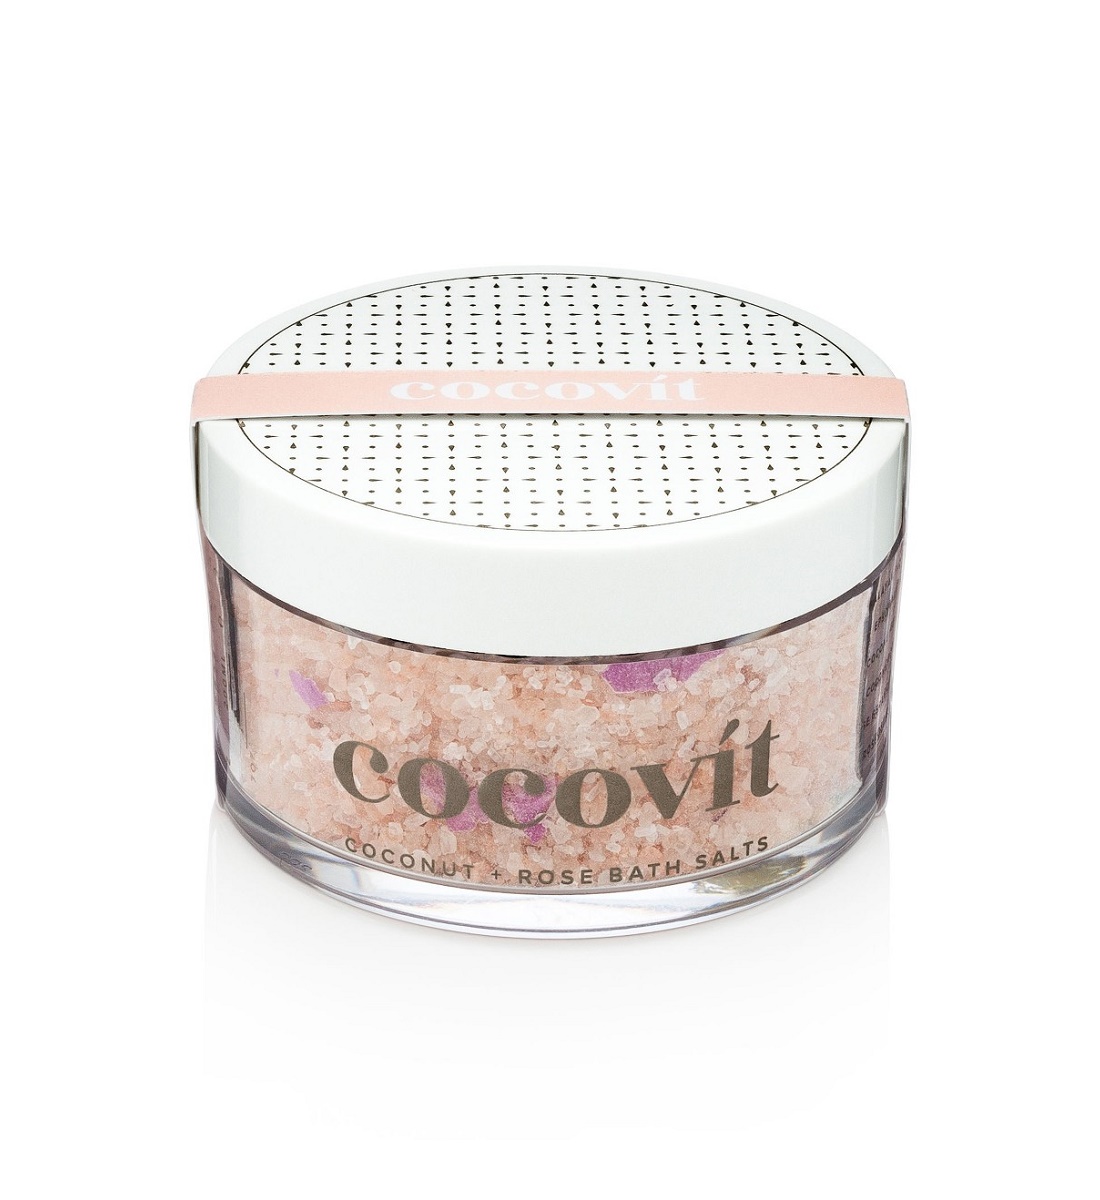 Cocovit Coconut + Rose Bath Salts